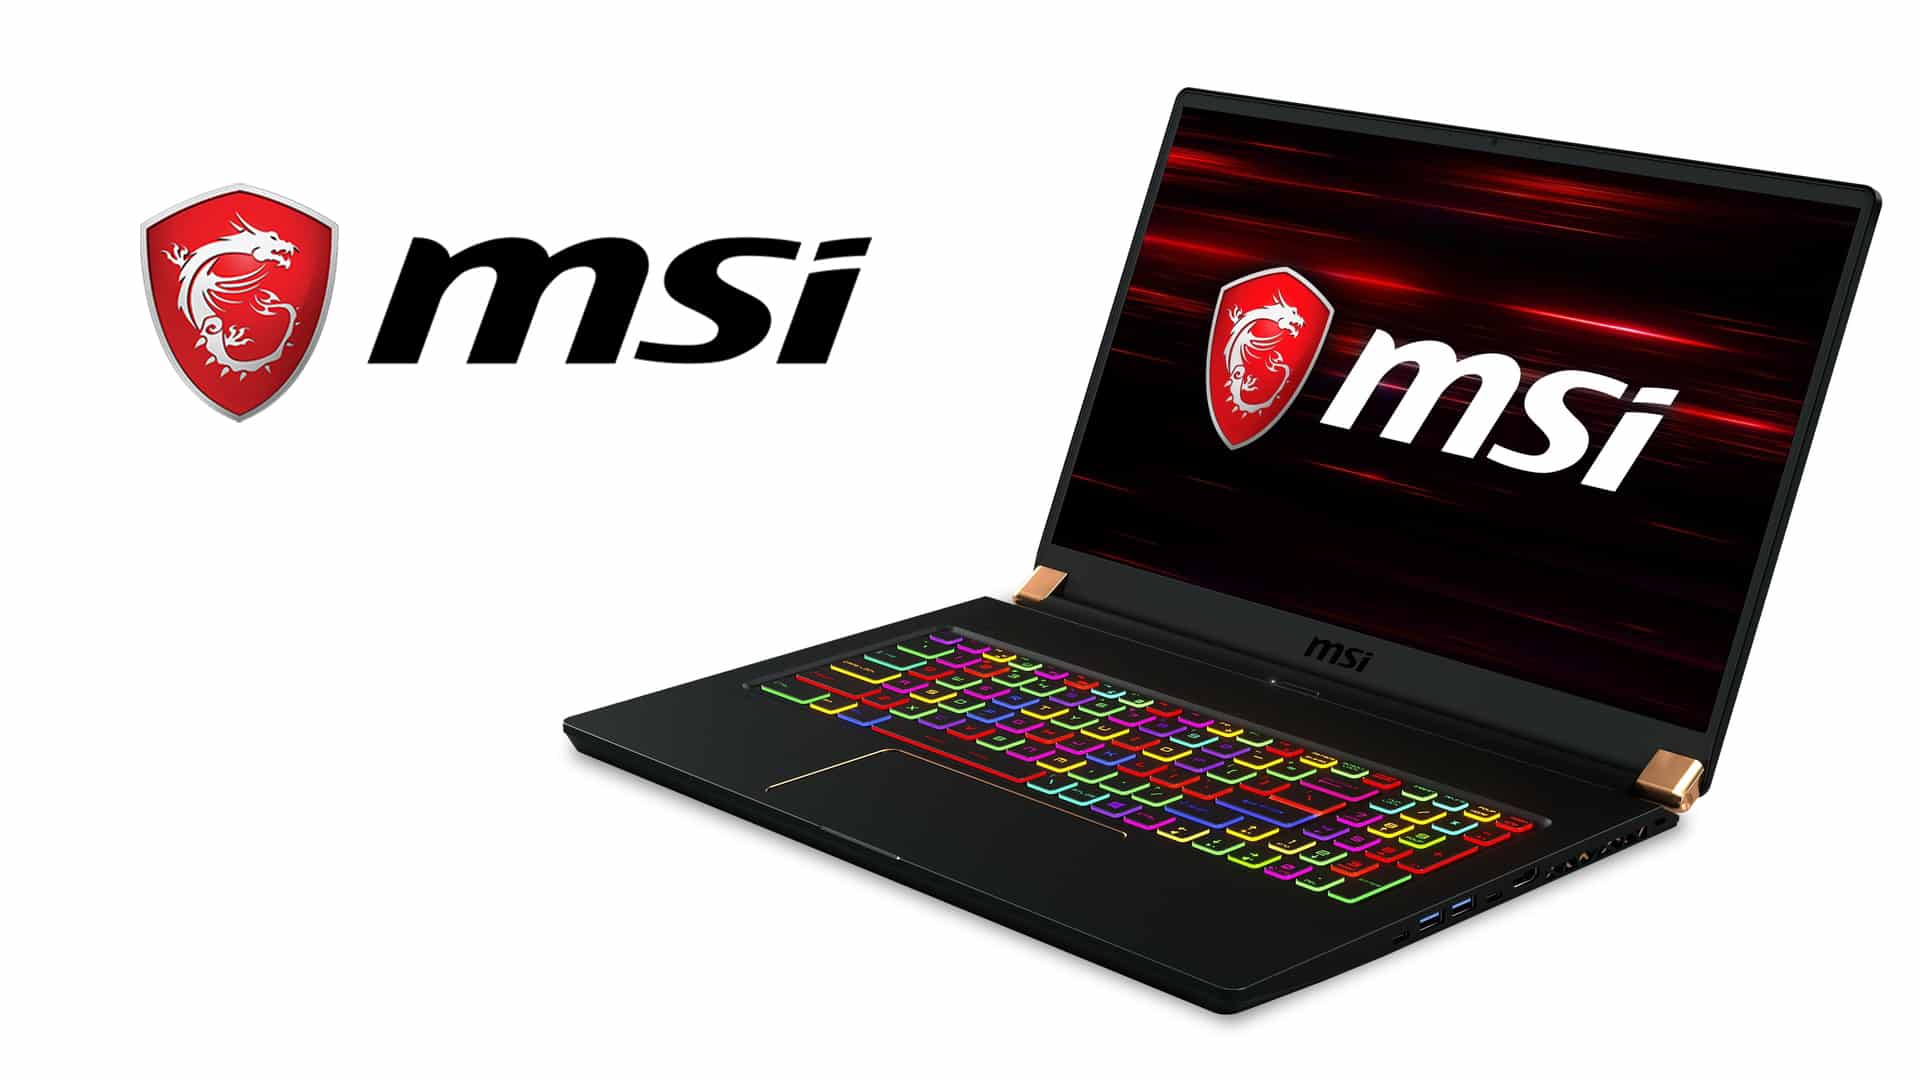 MSI gs75. MSI 17. Дисплей для игрового ноутбука MSI. Картинка для заставки ноутбука МСИ.